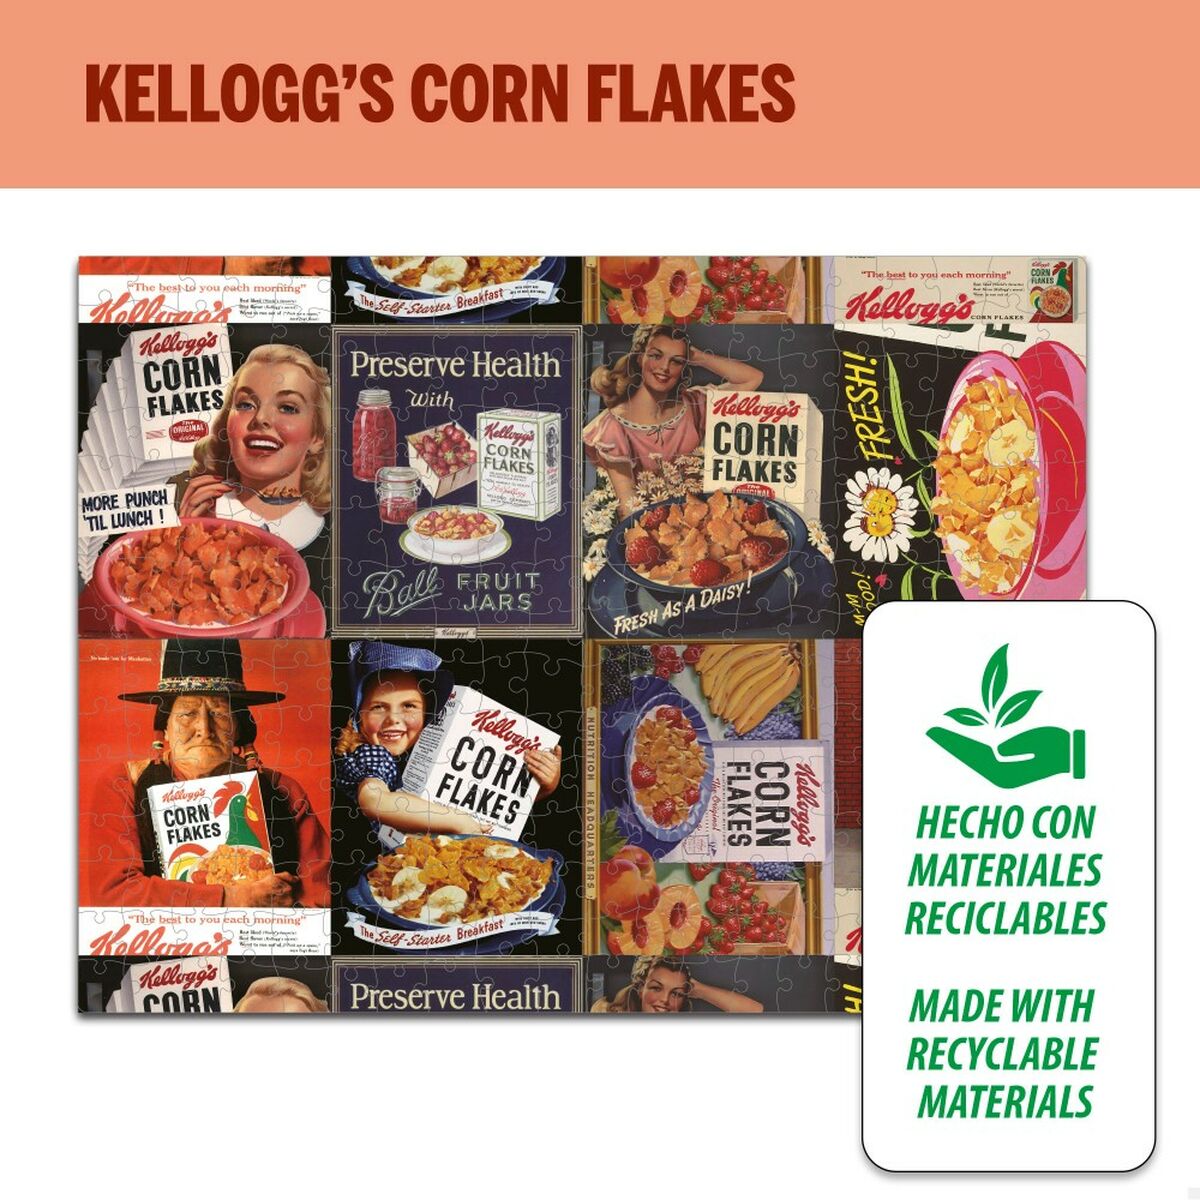 Puzzel Kellogg's Corn Flakes 300 Onderdelen 45 x 60 cm (6 Stuks)